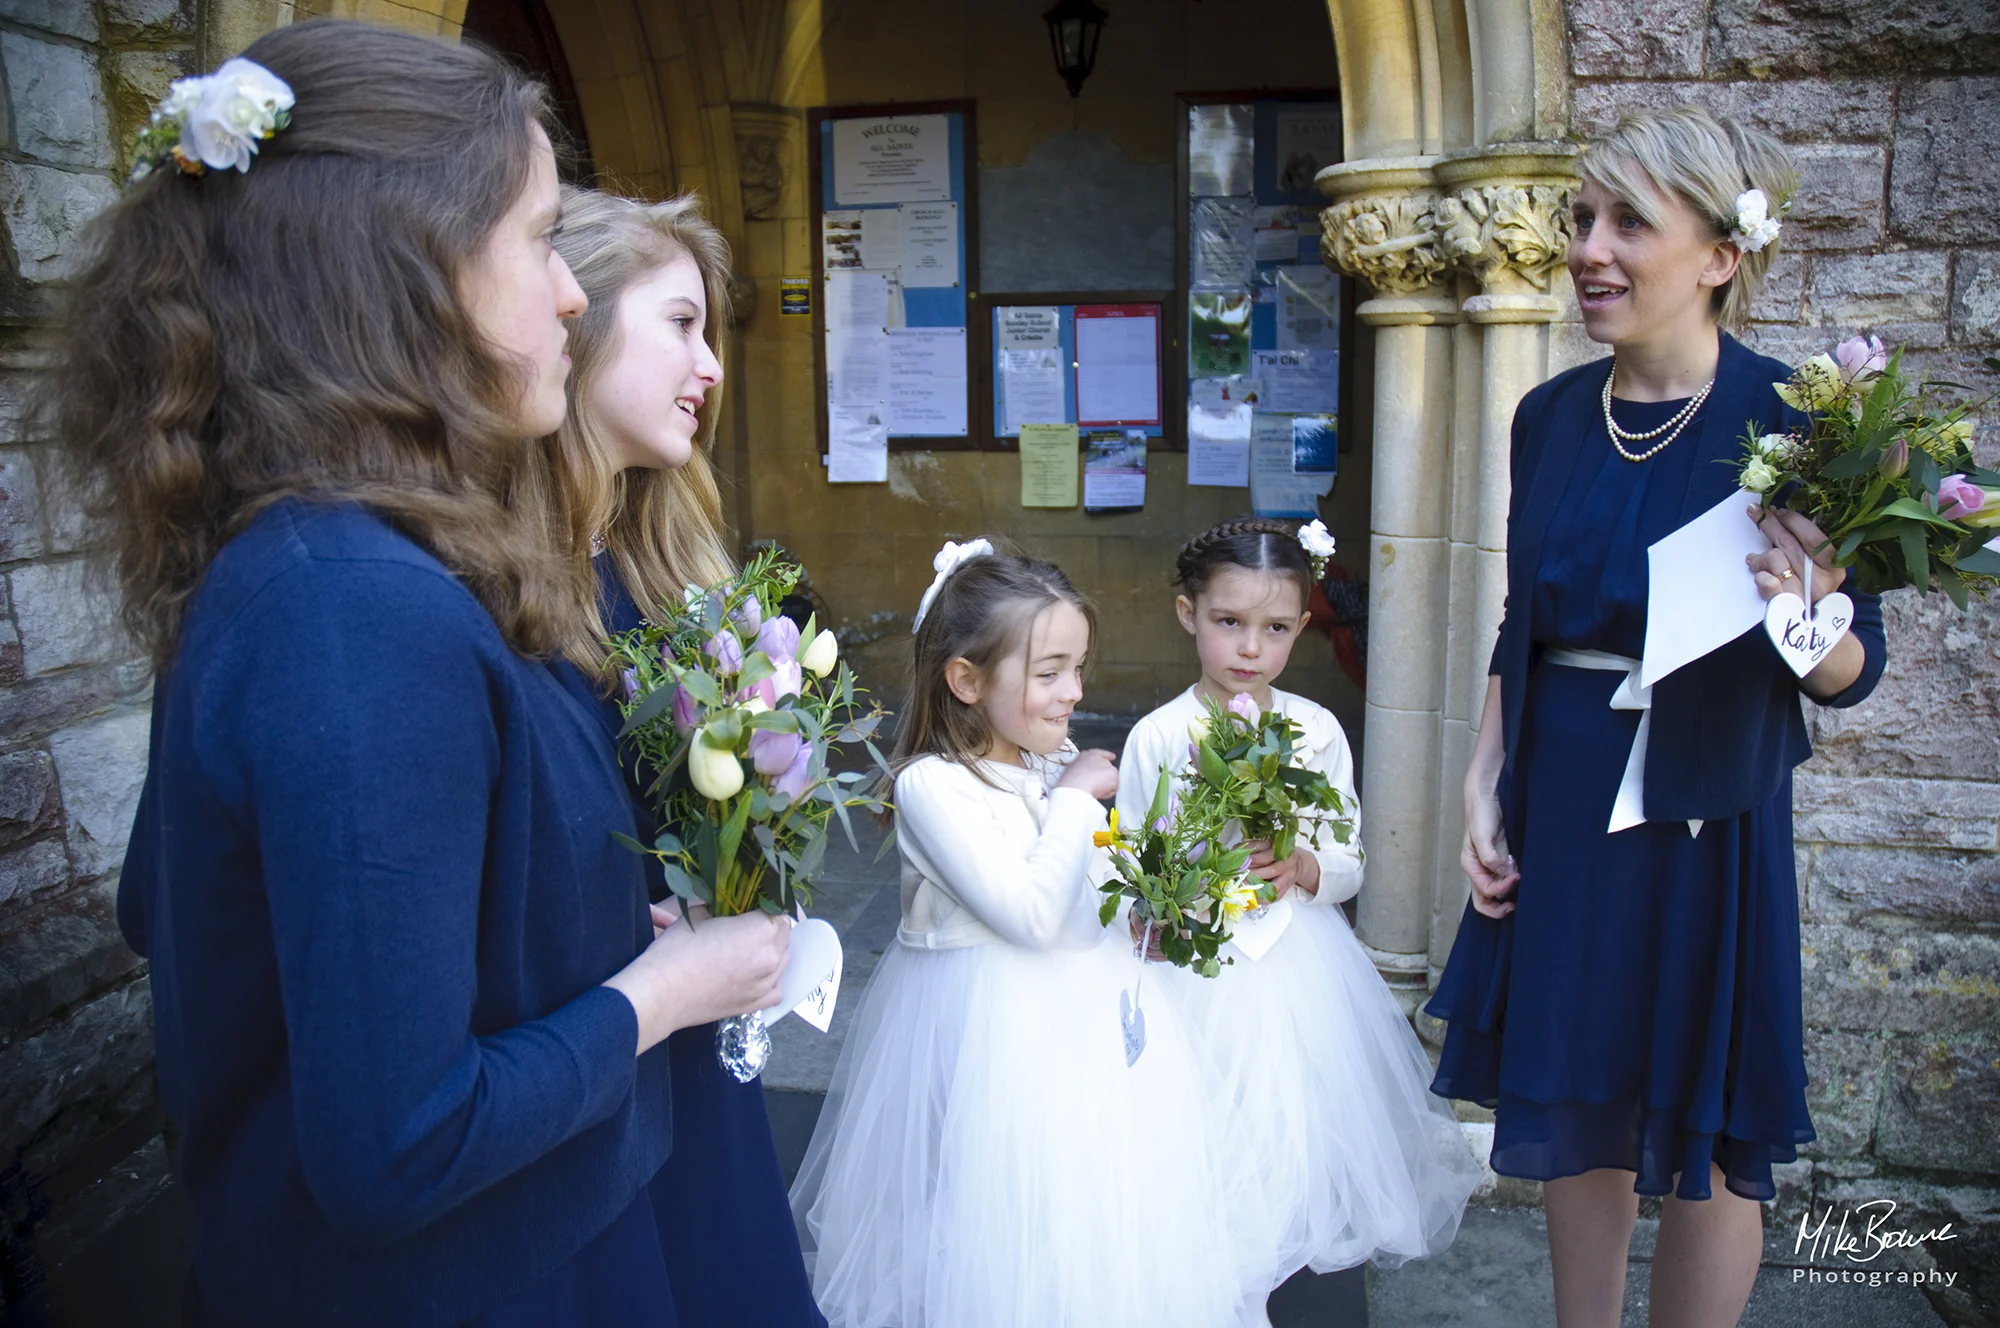 Bridesmaids and flower girls in conversation in a church doorway